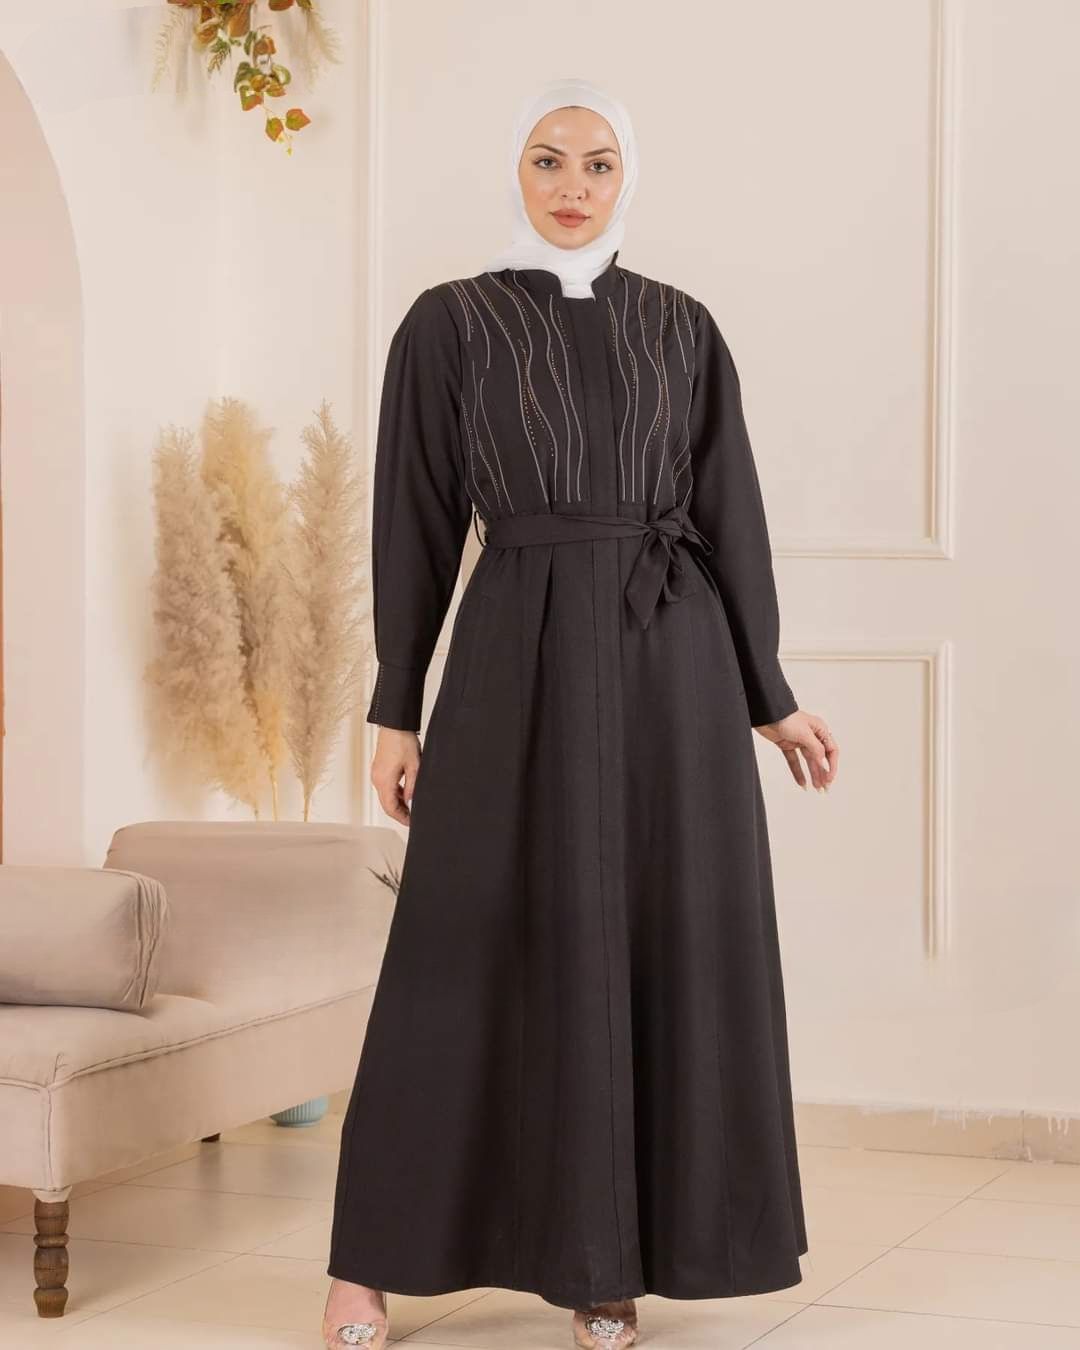 Jilbab Of Elegance - Modern High Quality Jilbab